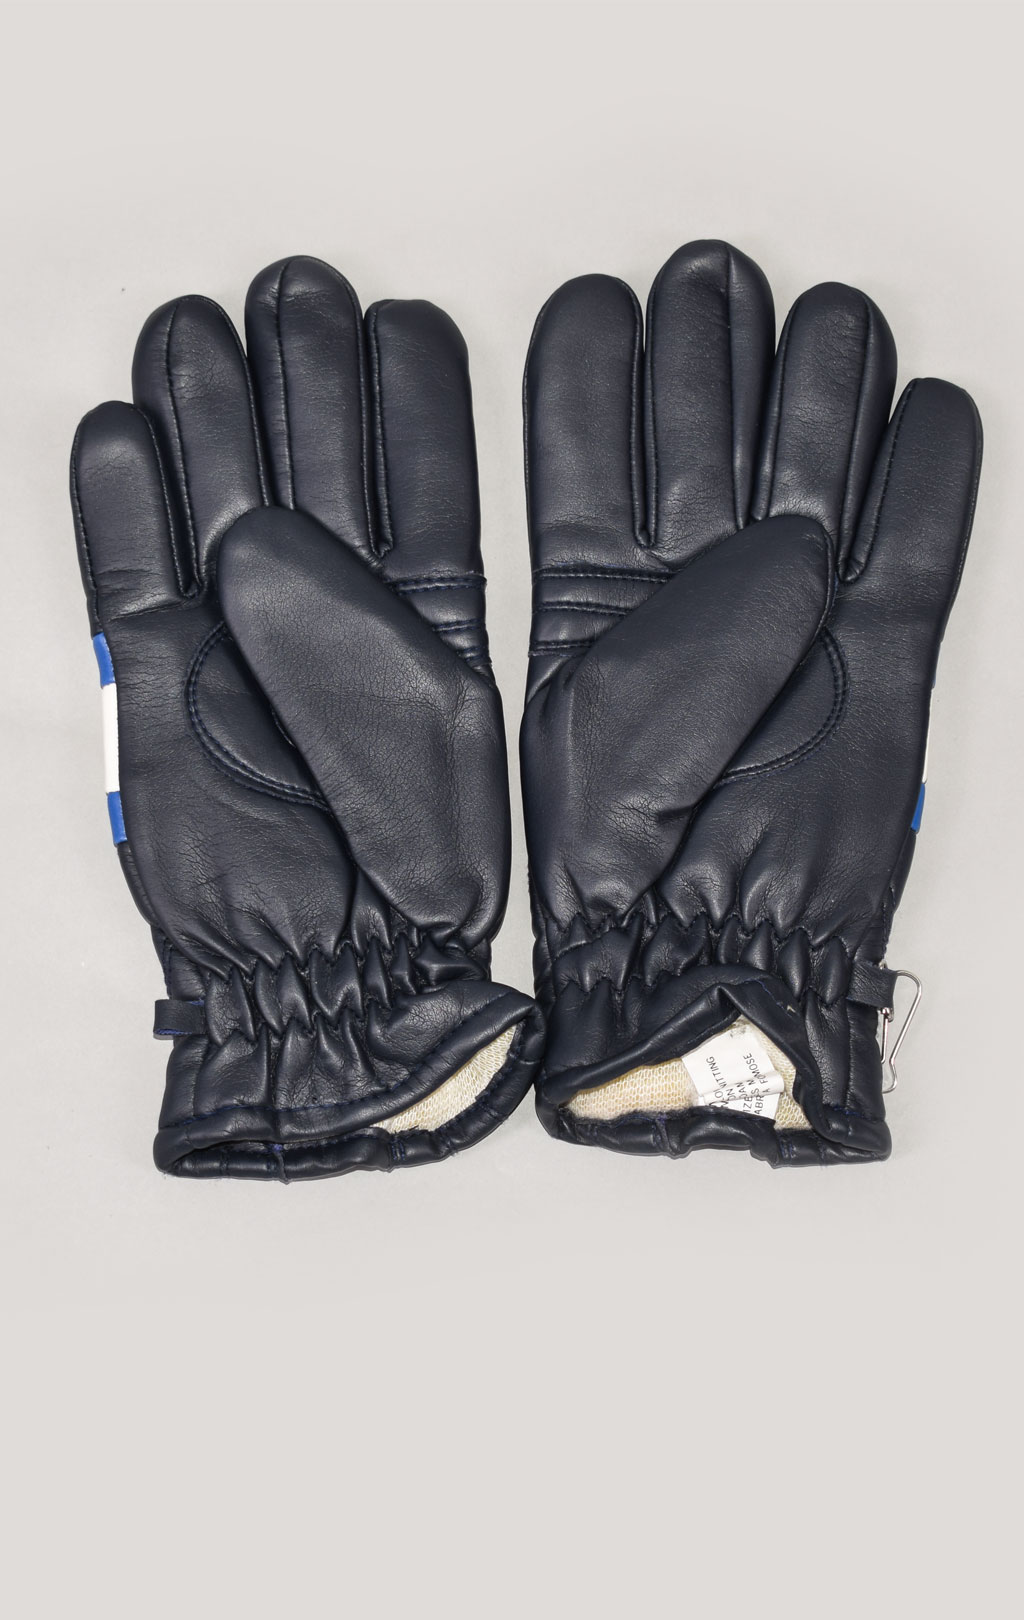 Женские перчатки ALPINE TROOPS утеплённые (с флагом) navy Франция